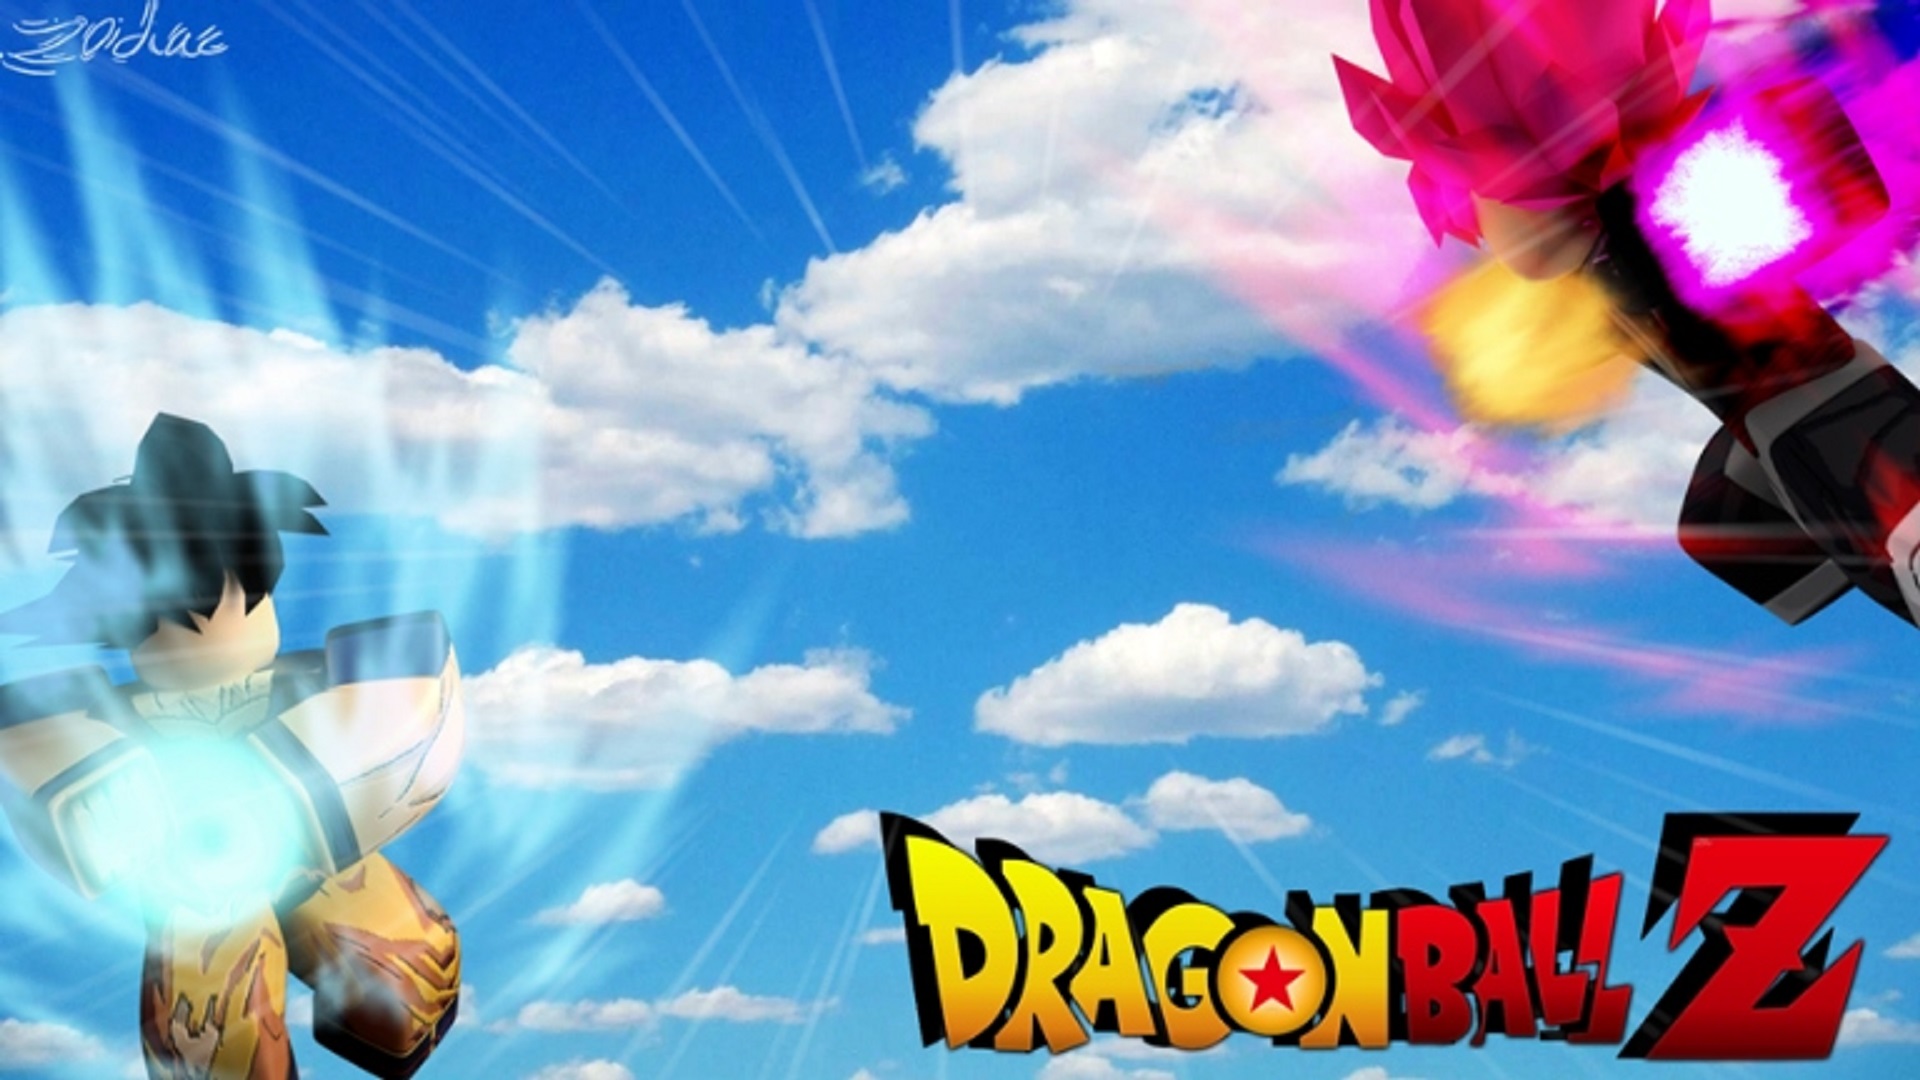 Dragon Ball Rage Codes 2019 07 2021 - hack dragon ball online roblox